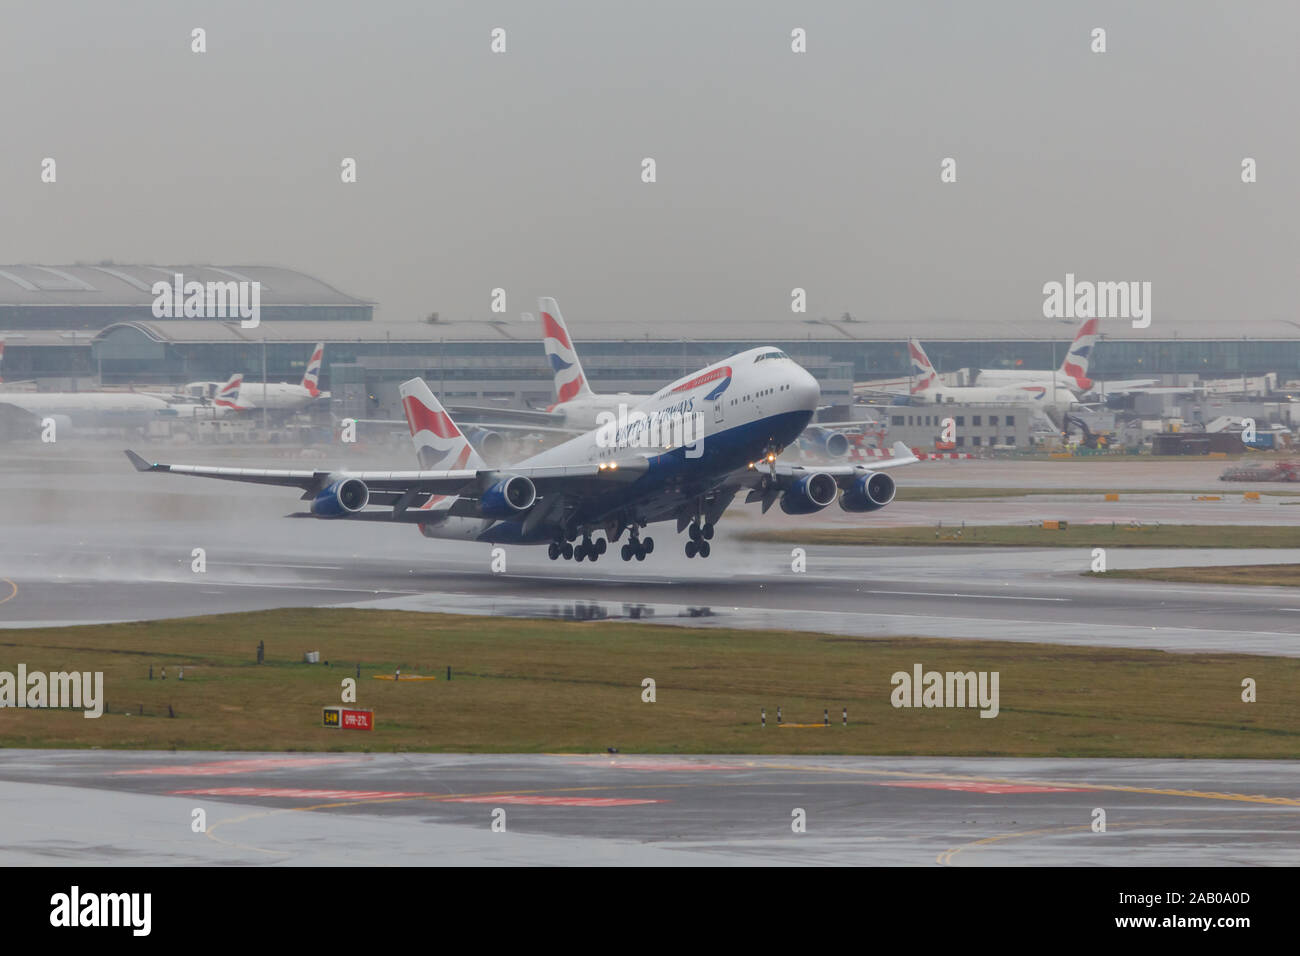 London, England - Circa 2019 : British Airways Boeing 747 Taking off from LHR Airport Stock Photo